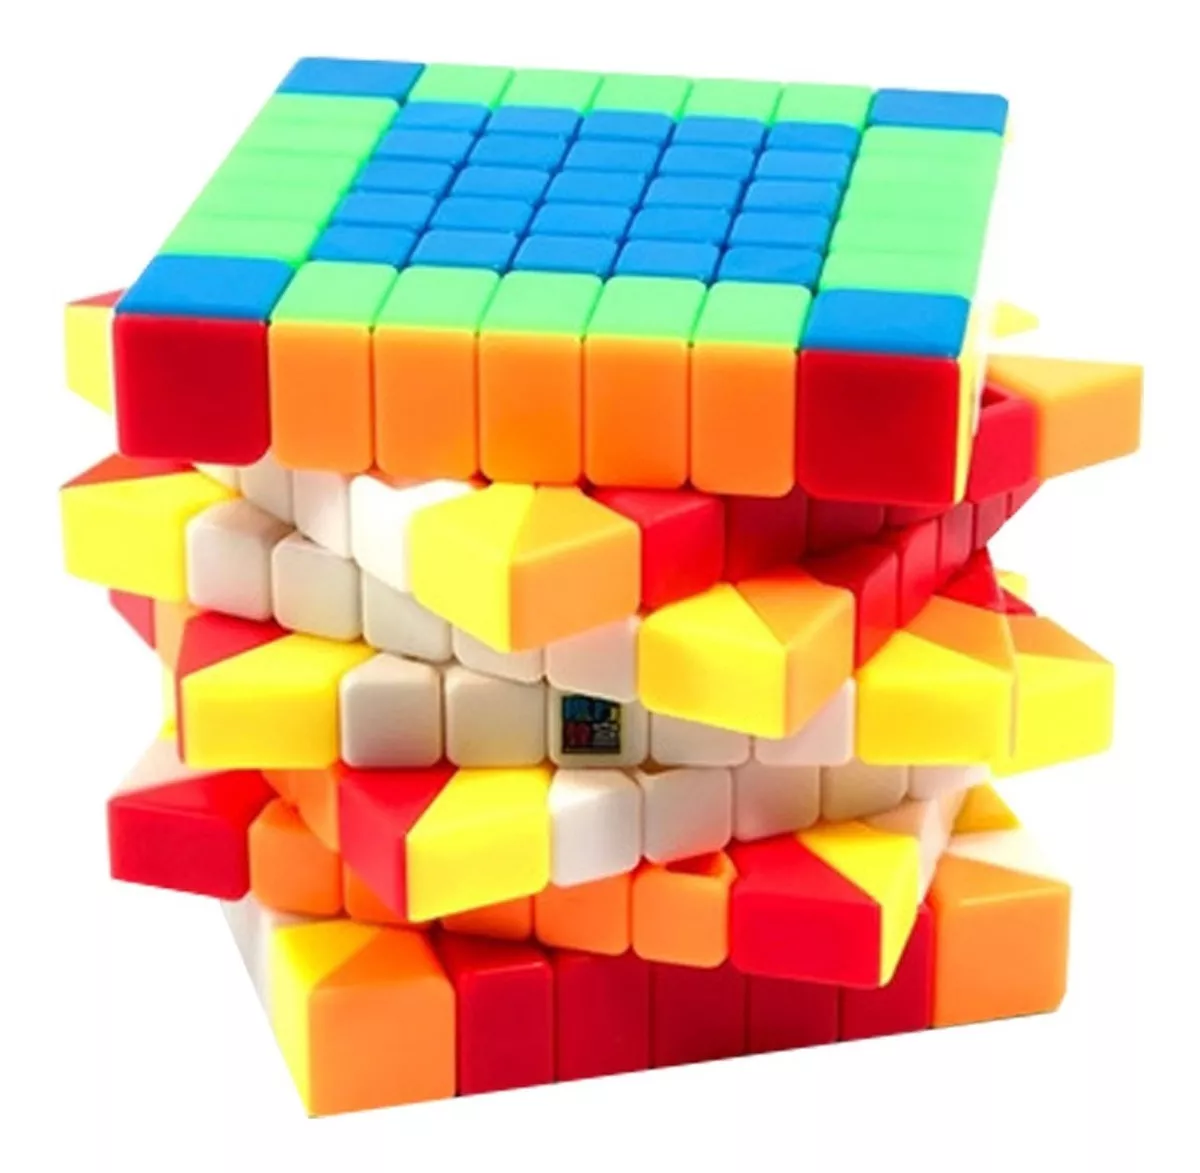 Tercera imagen para búsqueda de cubo rubik 4x4